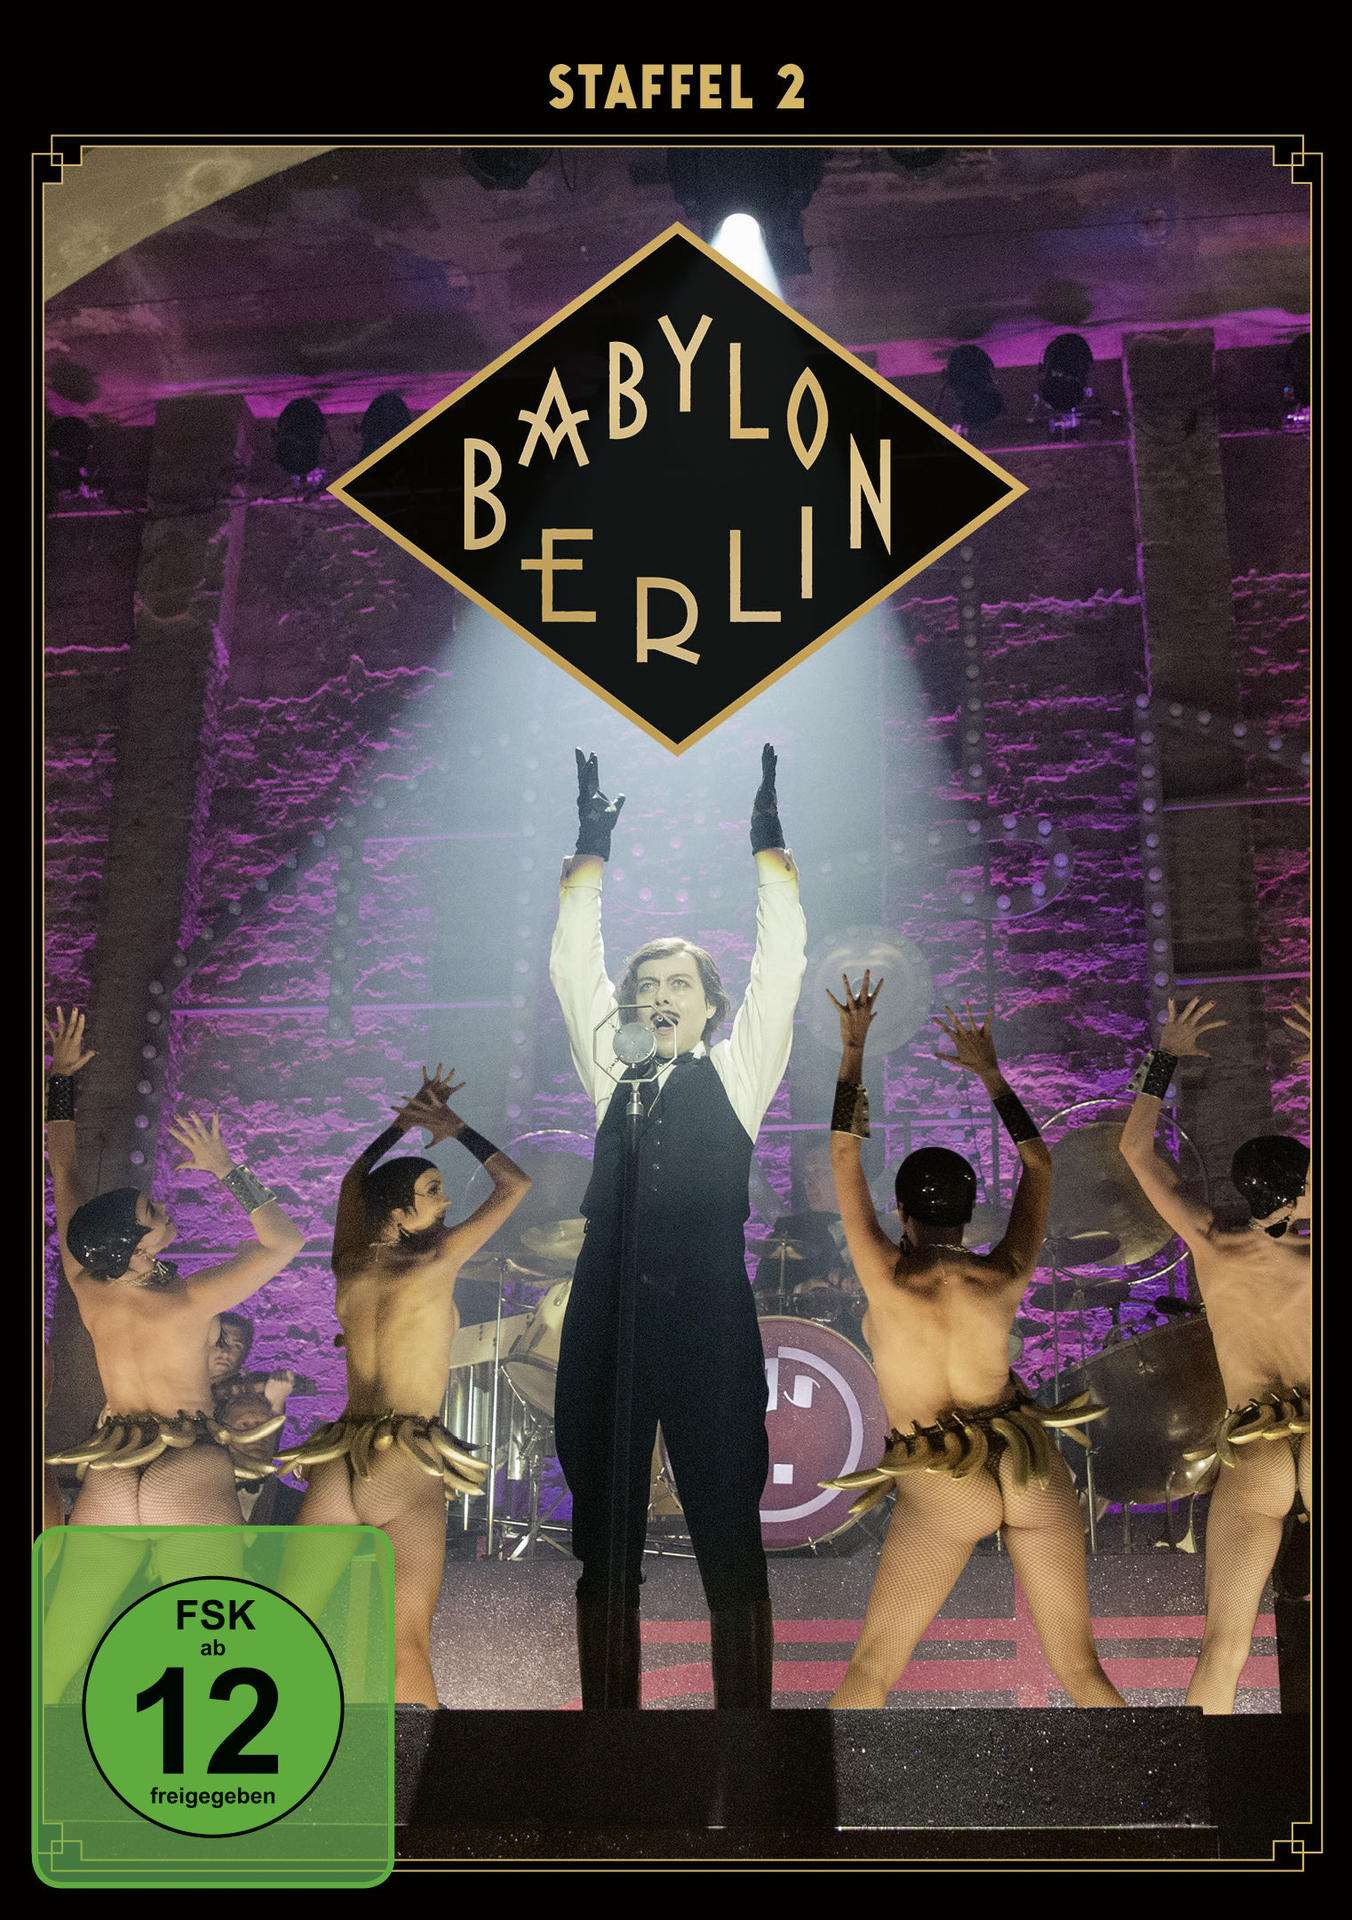 Babylon Berlin - DVD Staffel 2